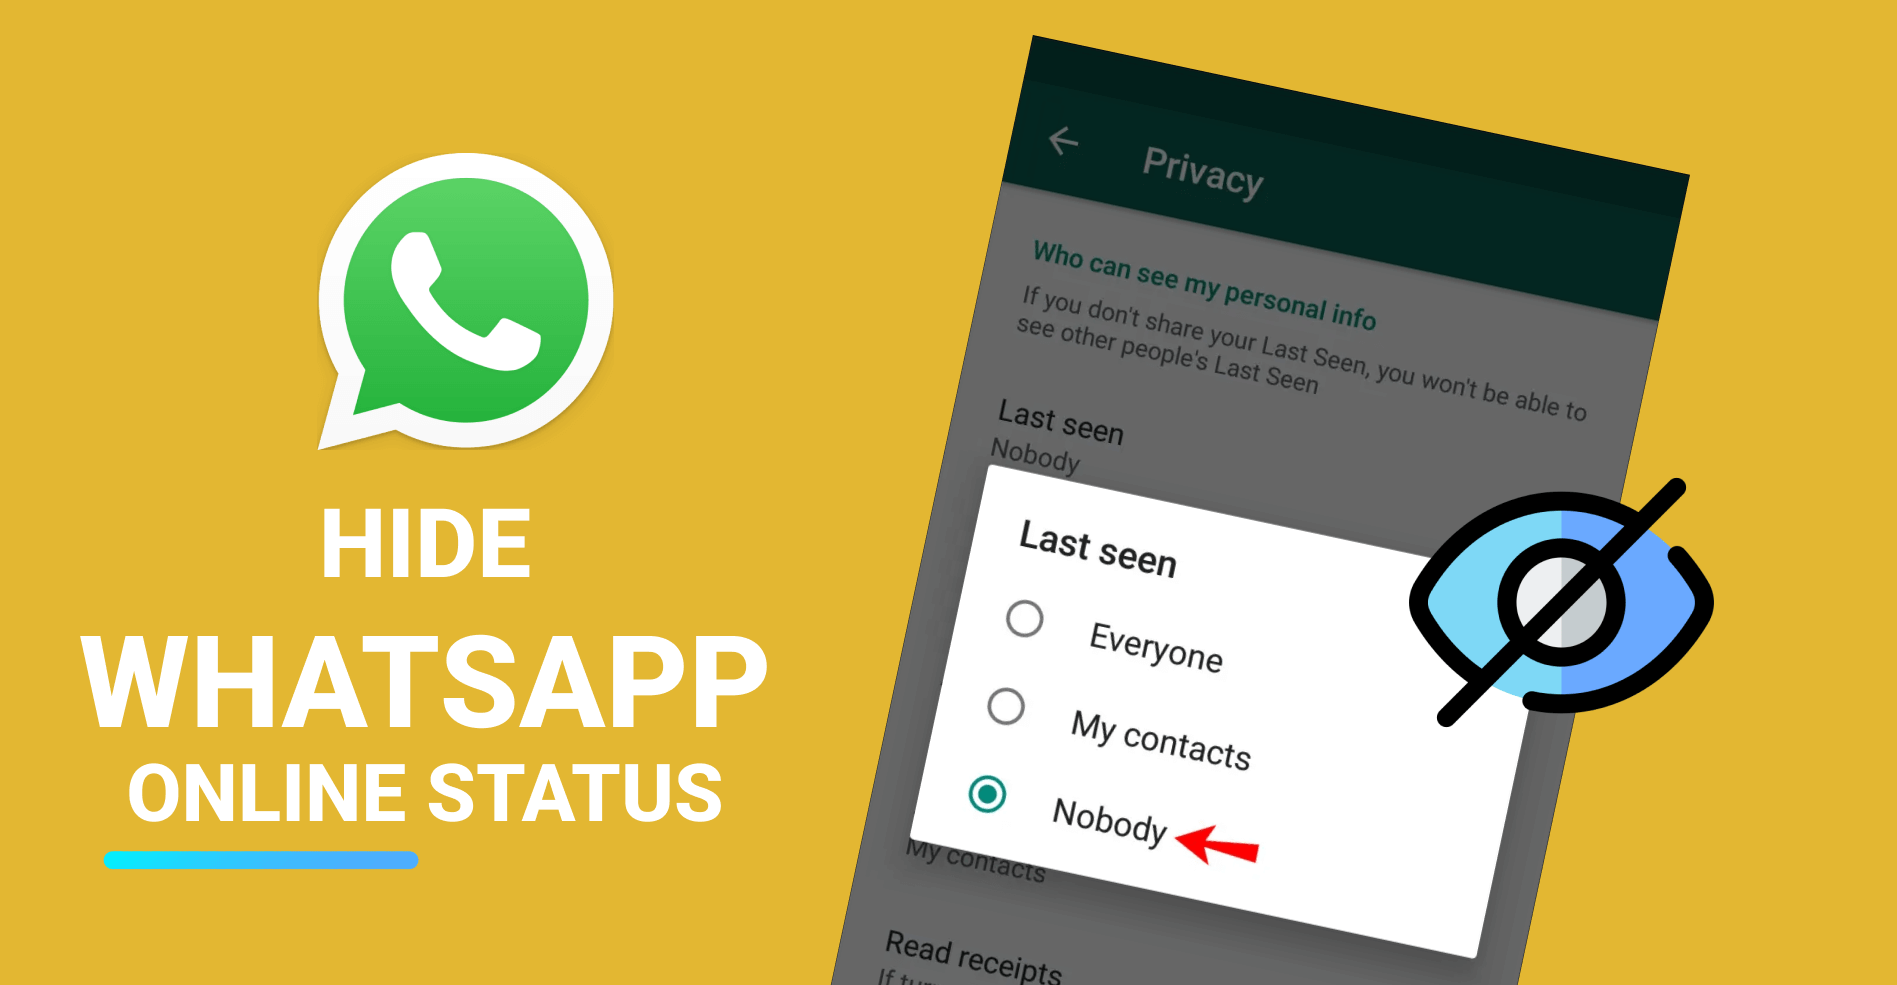  ocultar status online no whatsapp